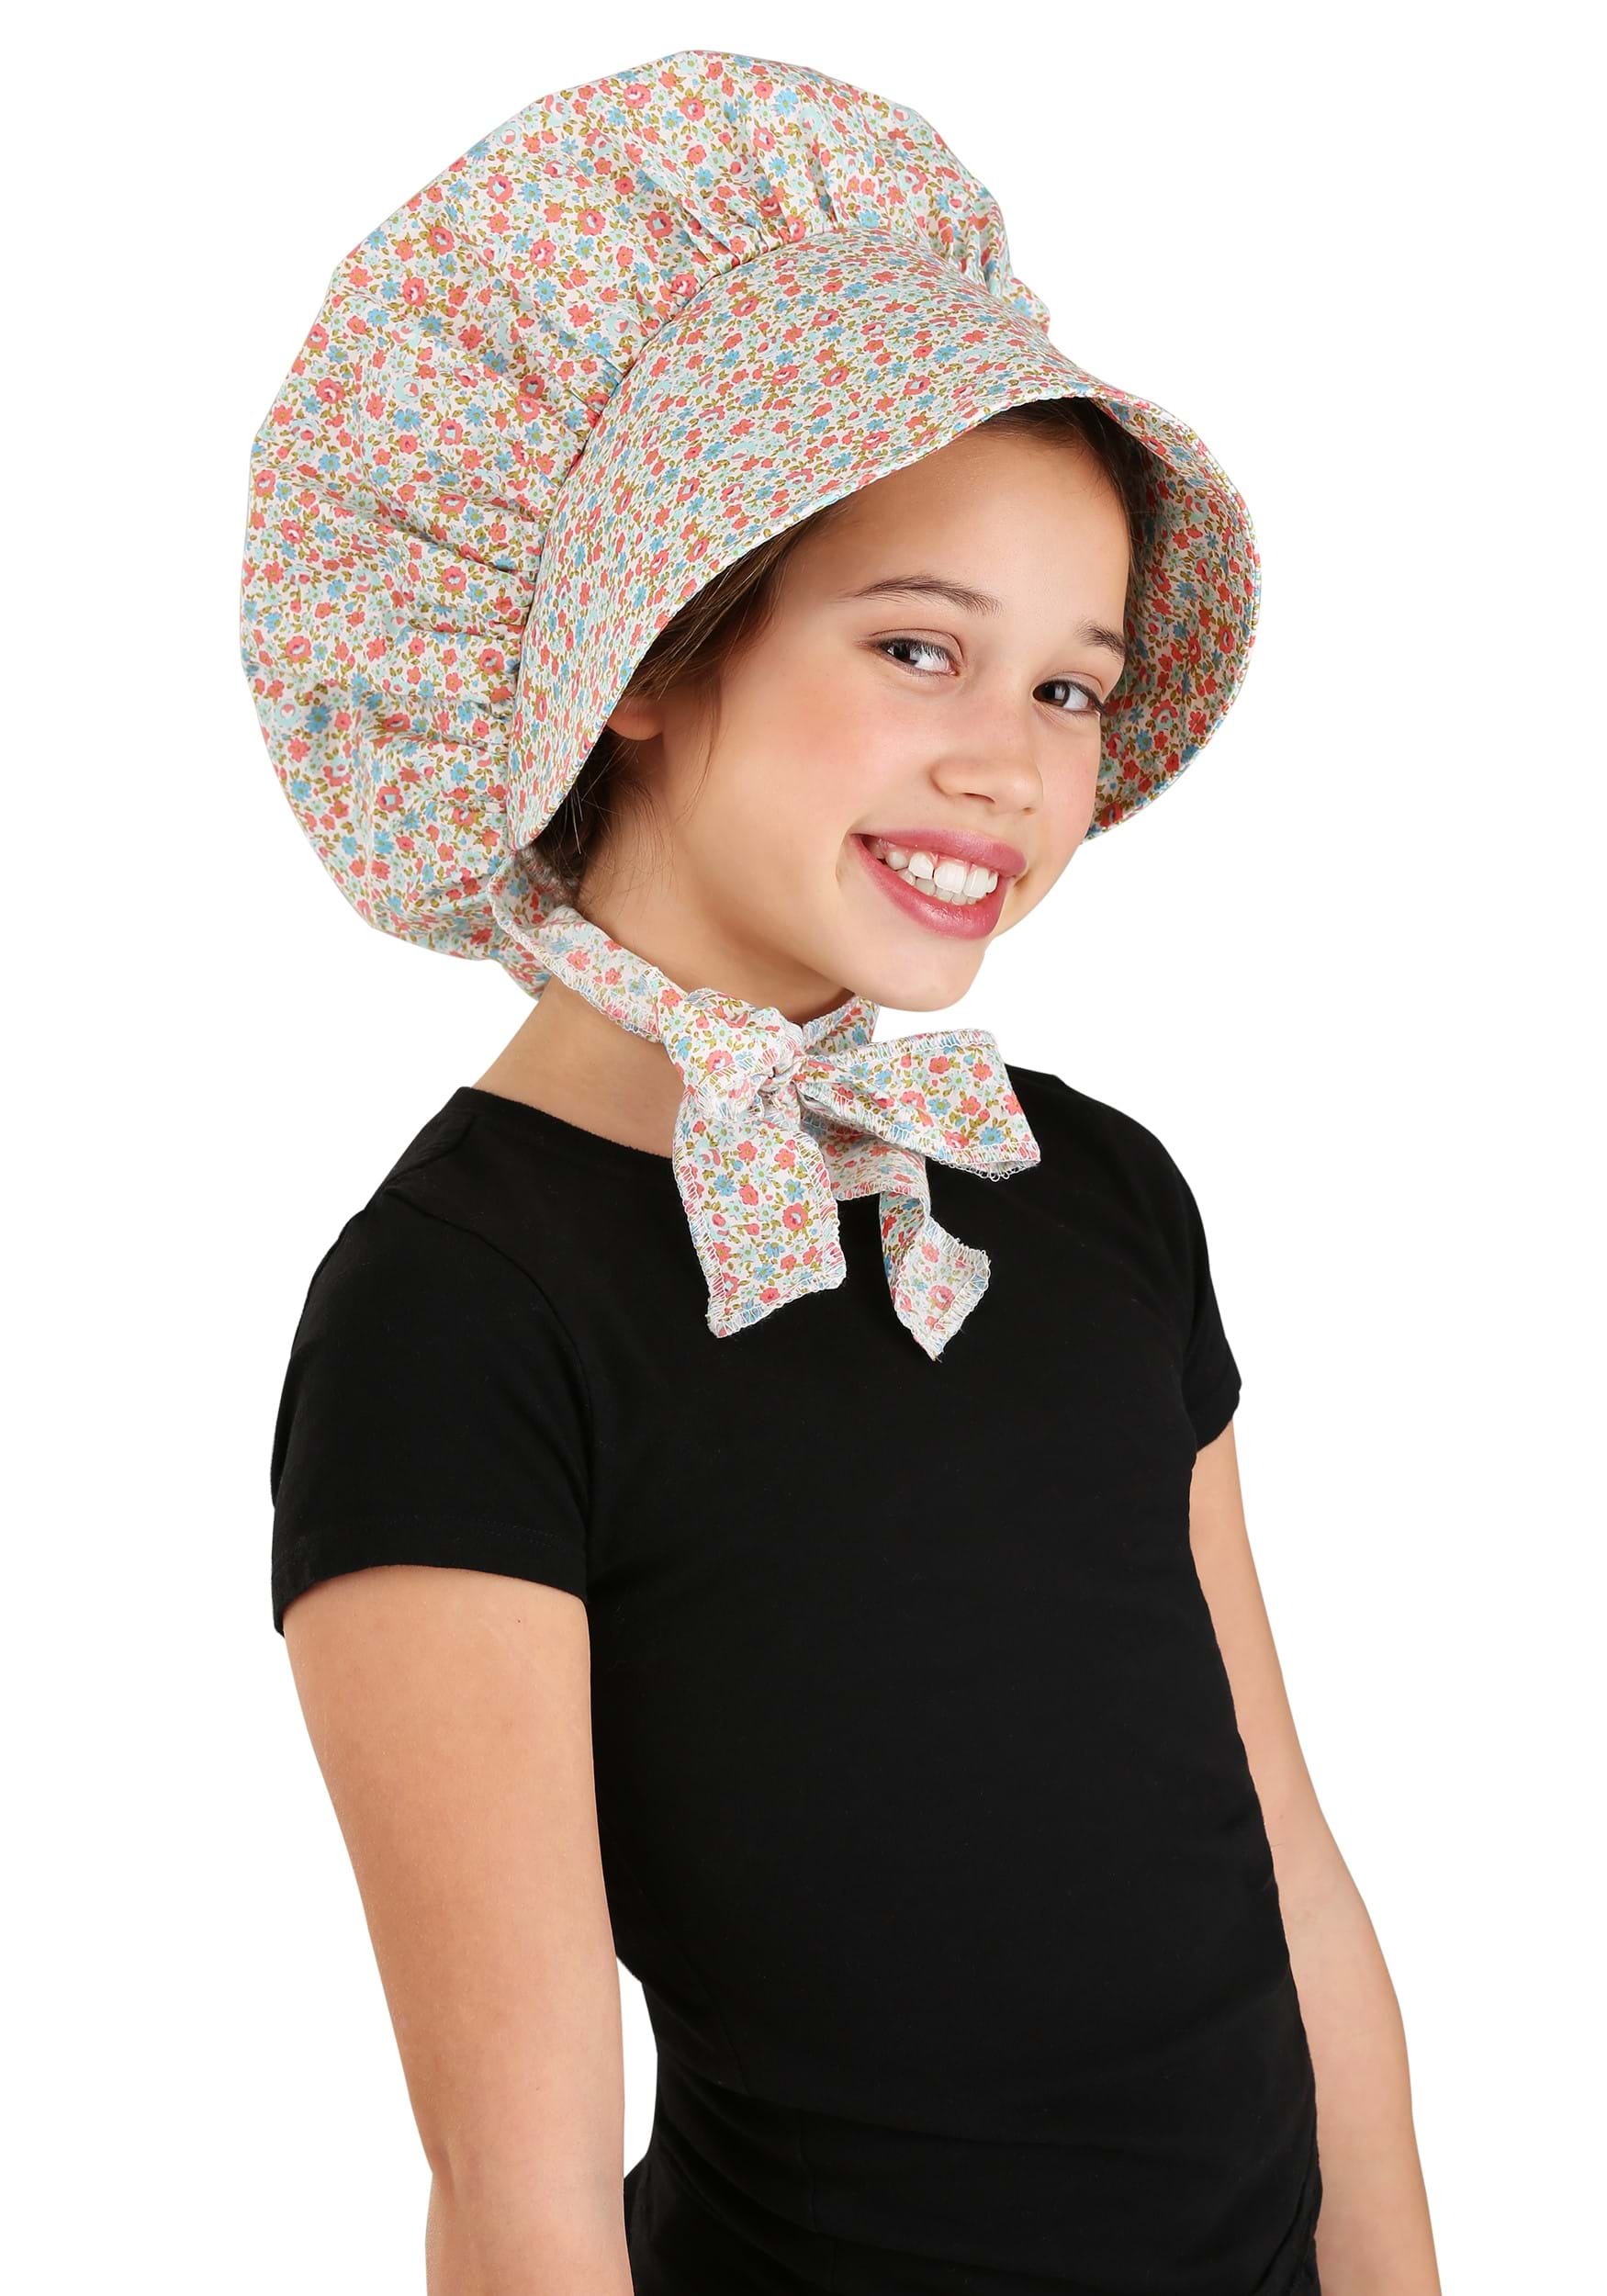 Prairie Girl Bonnet Costume Accessory